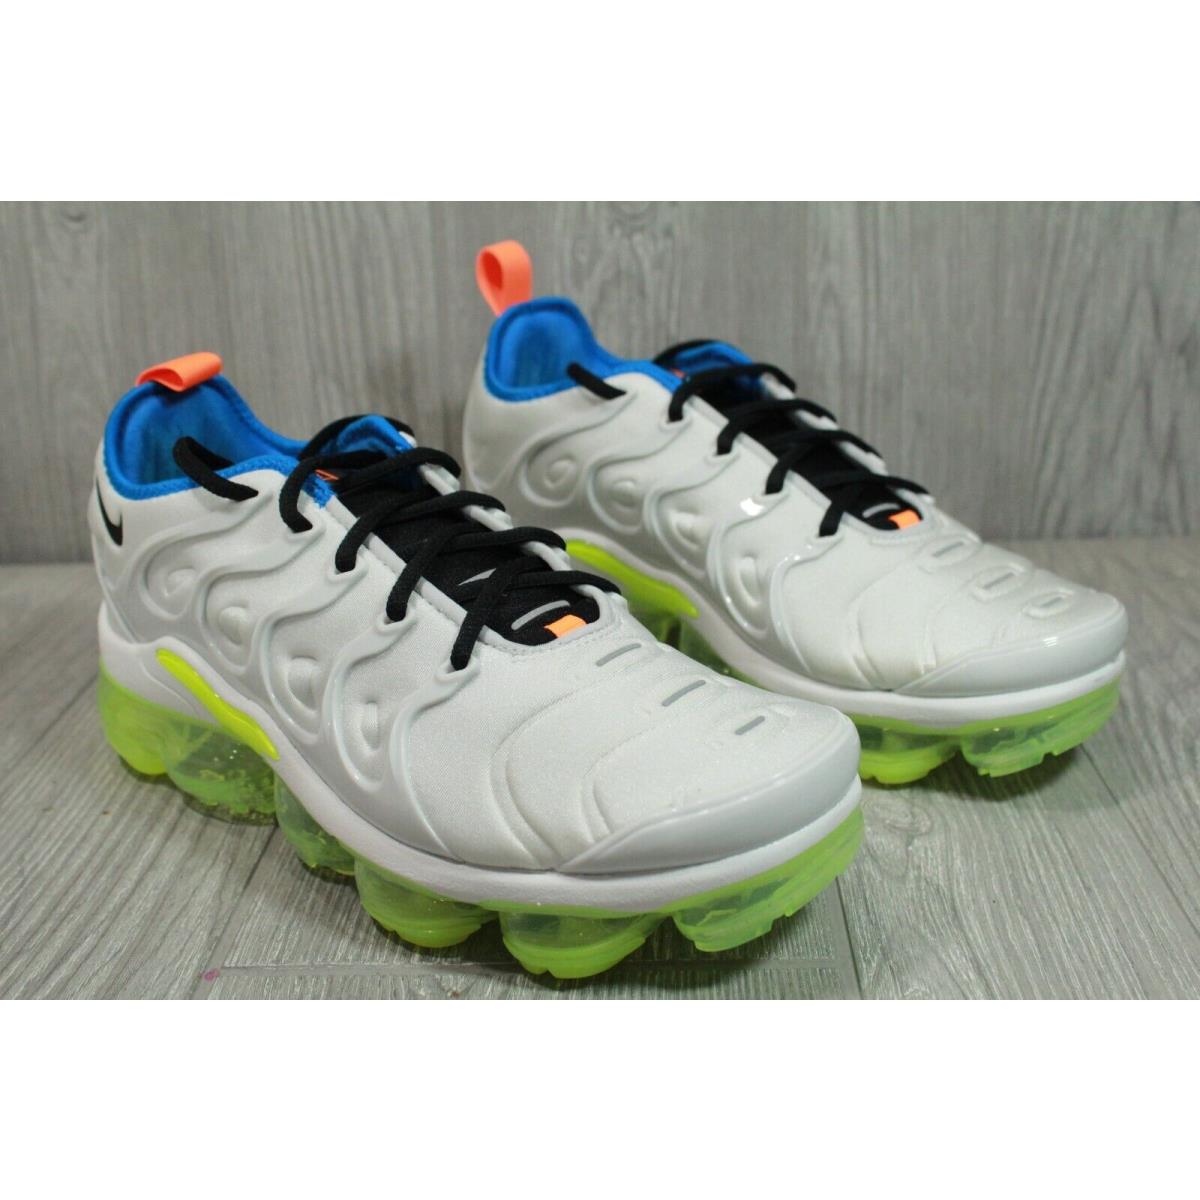 Nike shoes  - White 1